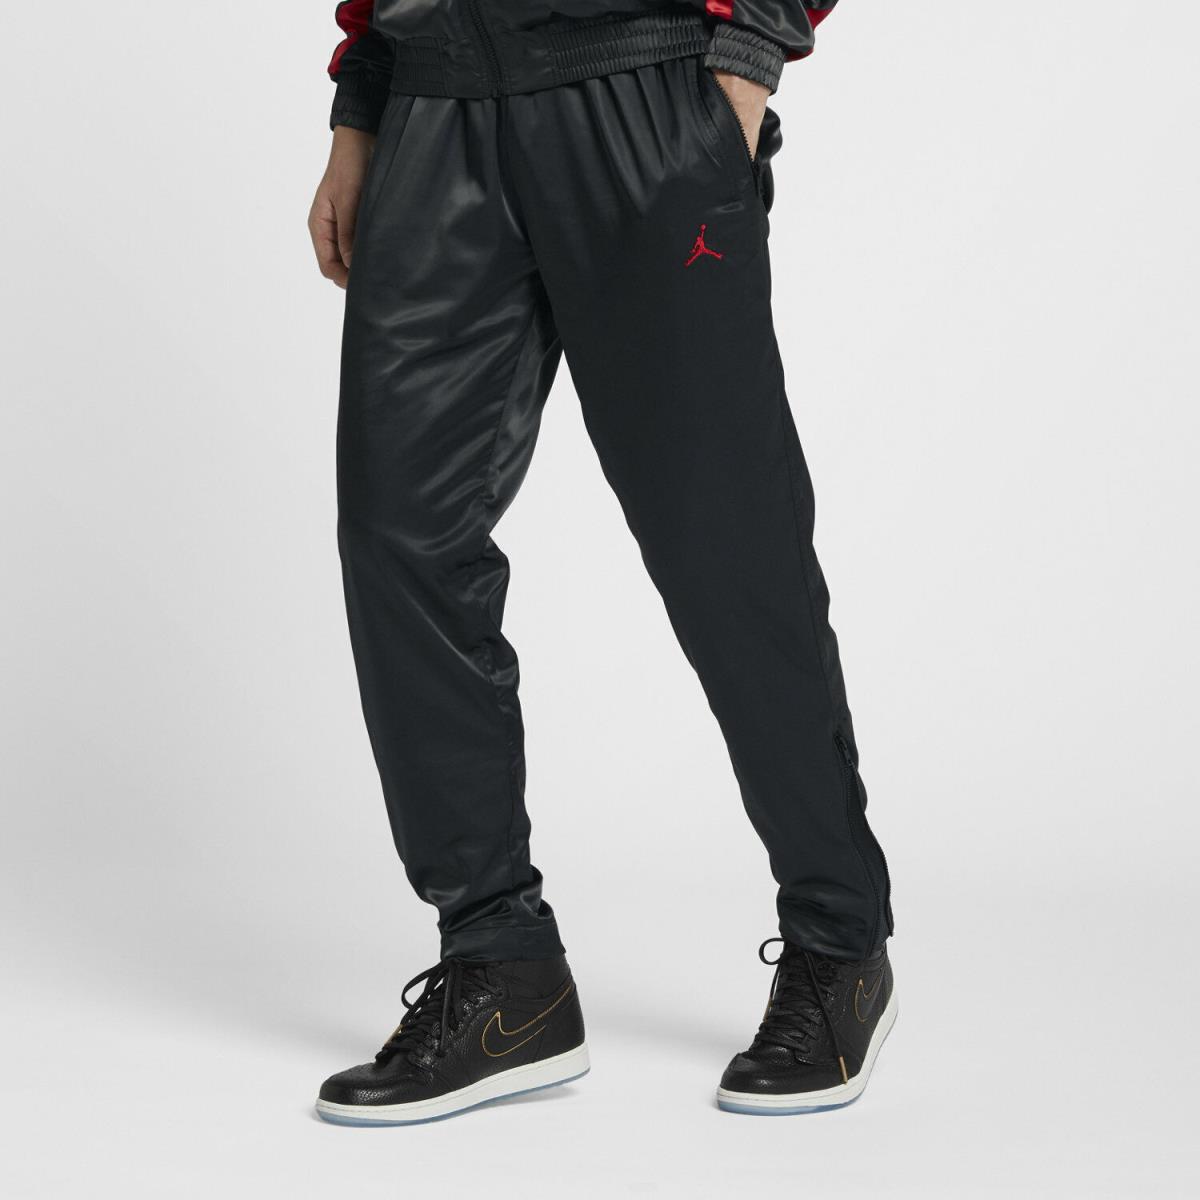 Nike Air Jordan AJ5 Satin Pants - XL - AR3137-010 Track Retro 5 Red Bred Warm Up V QS